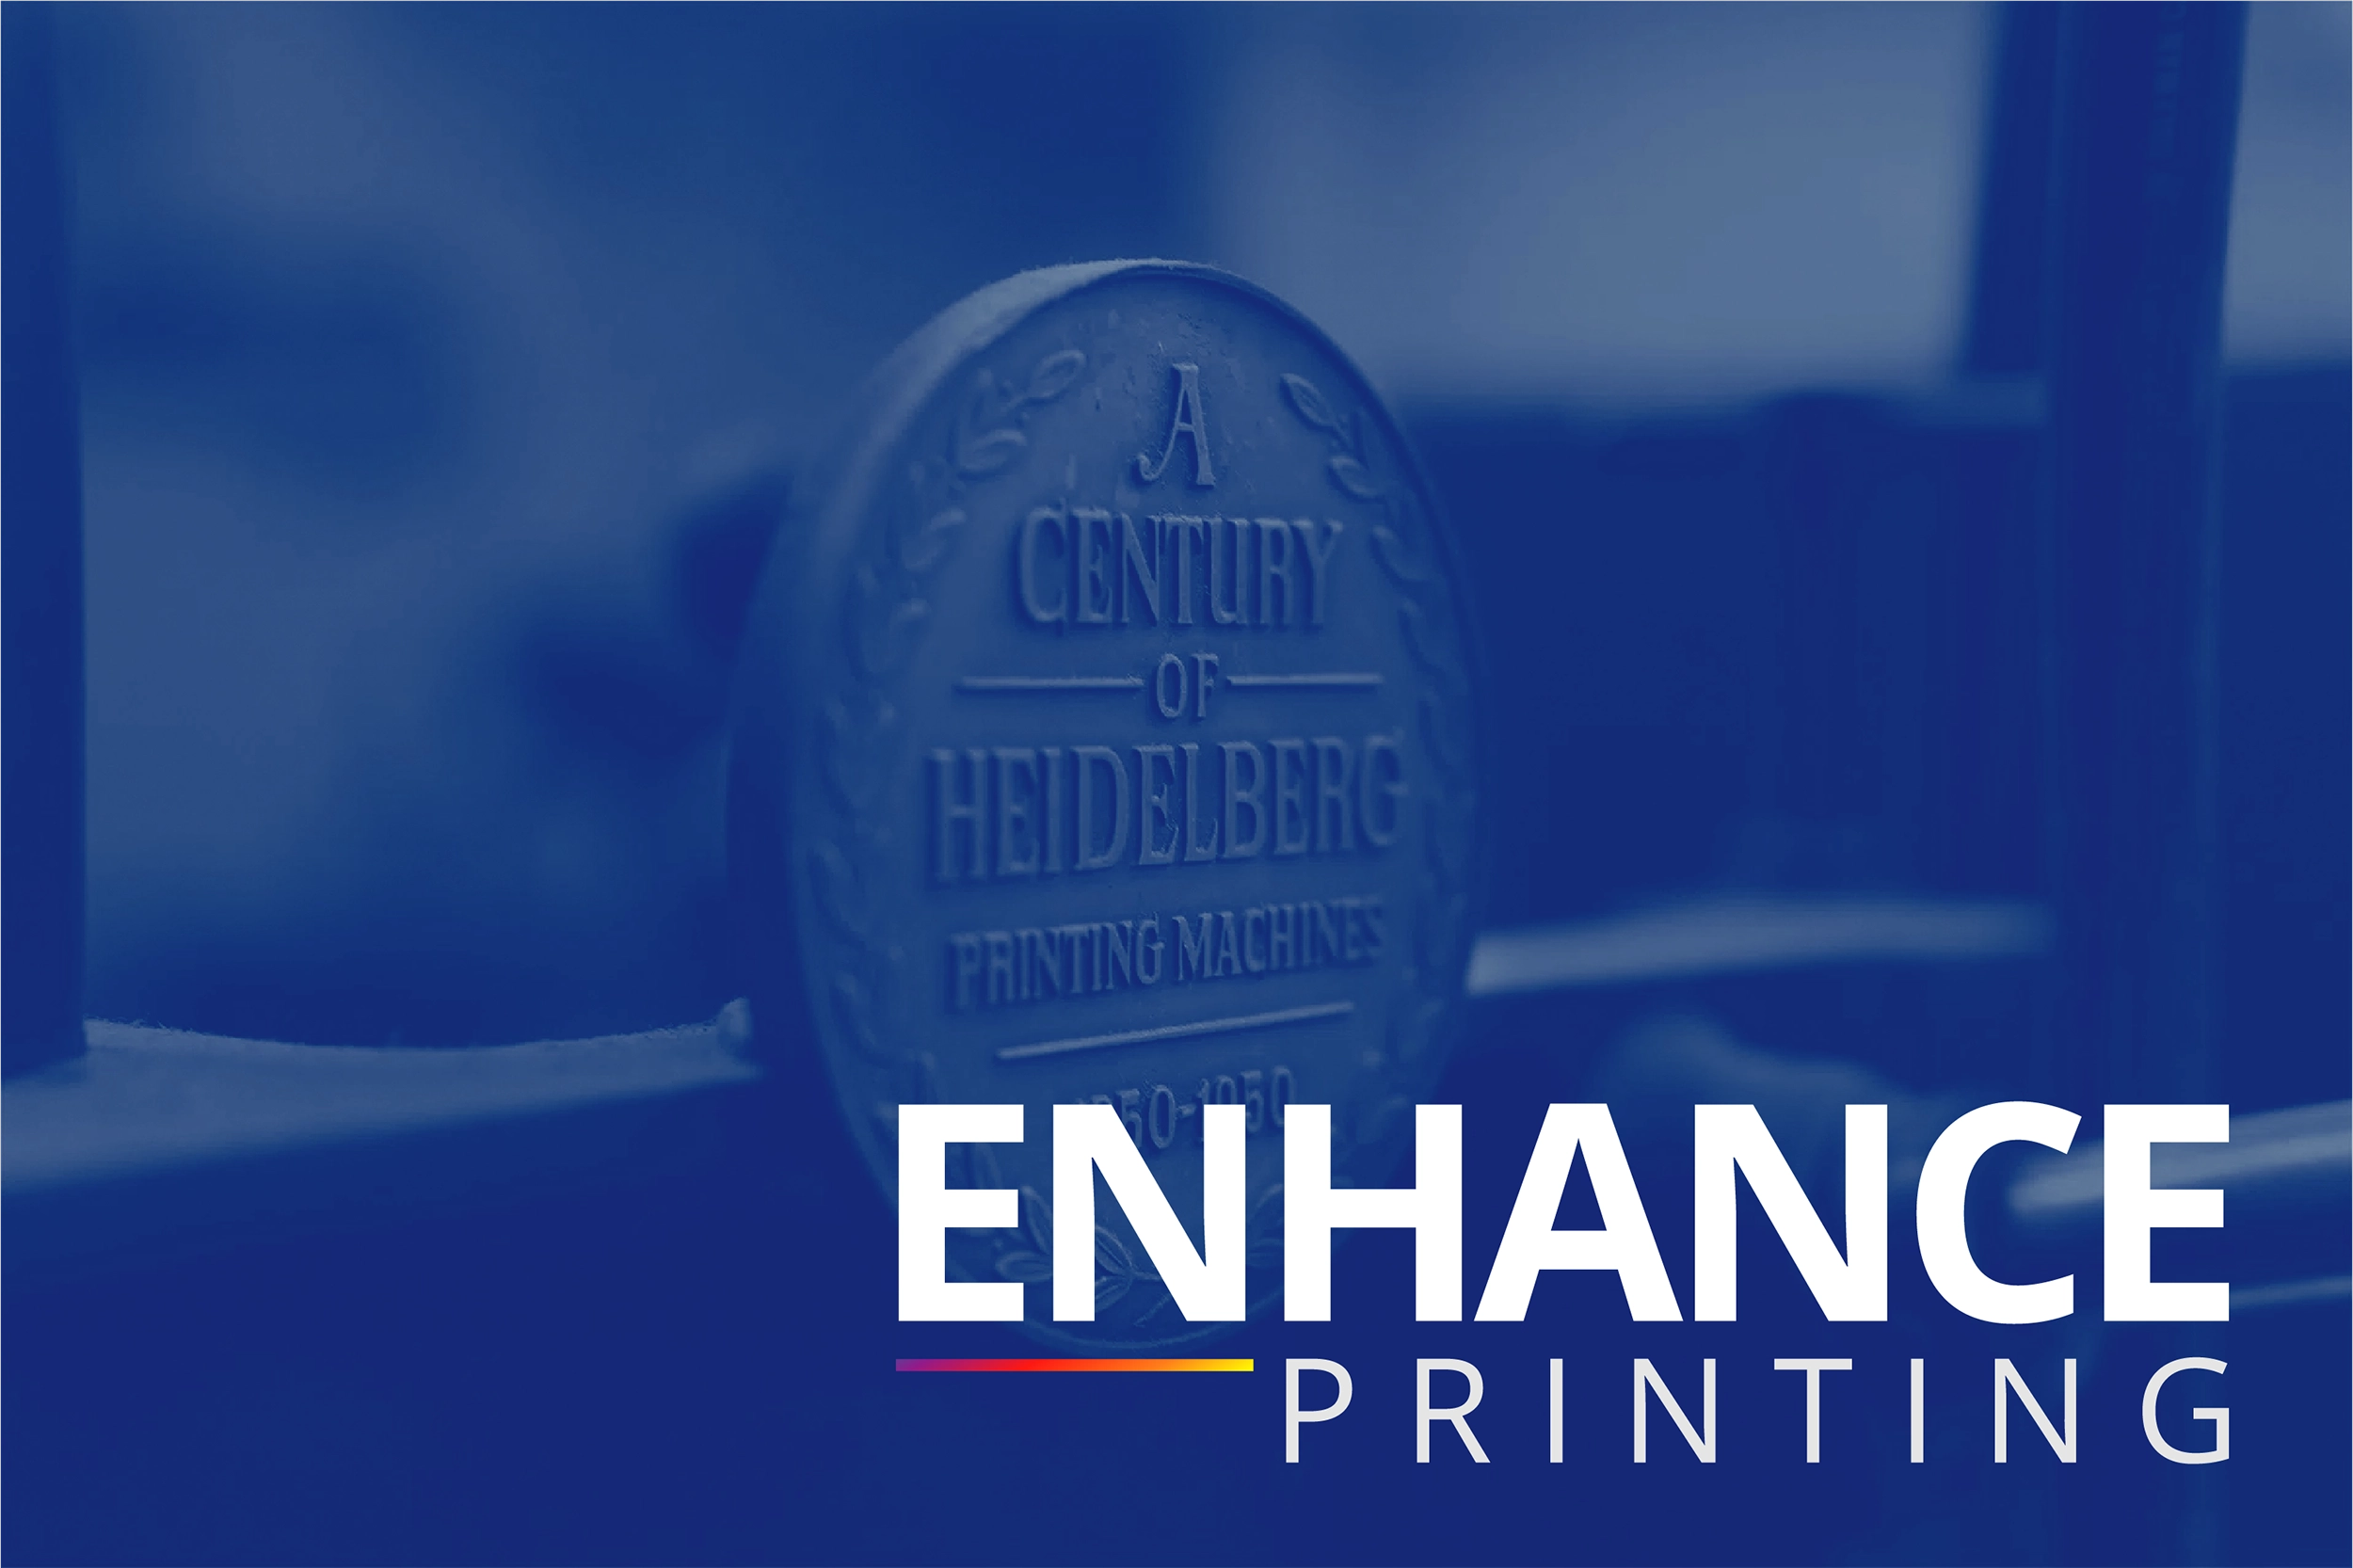 Heildelberg Press